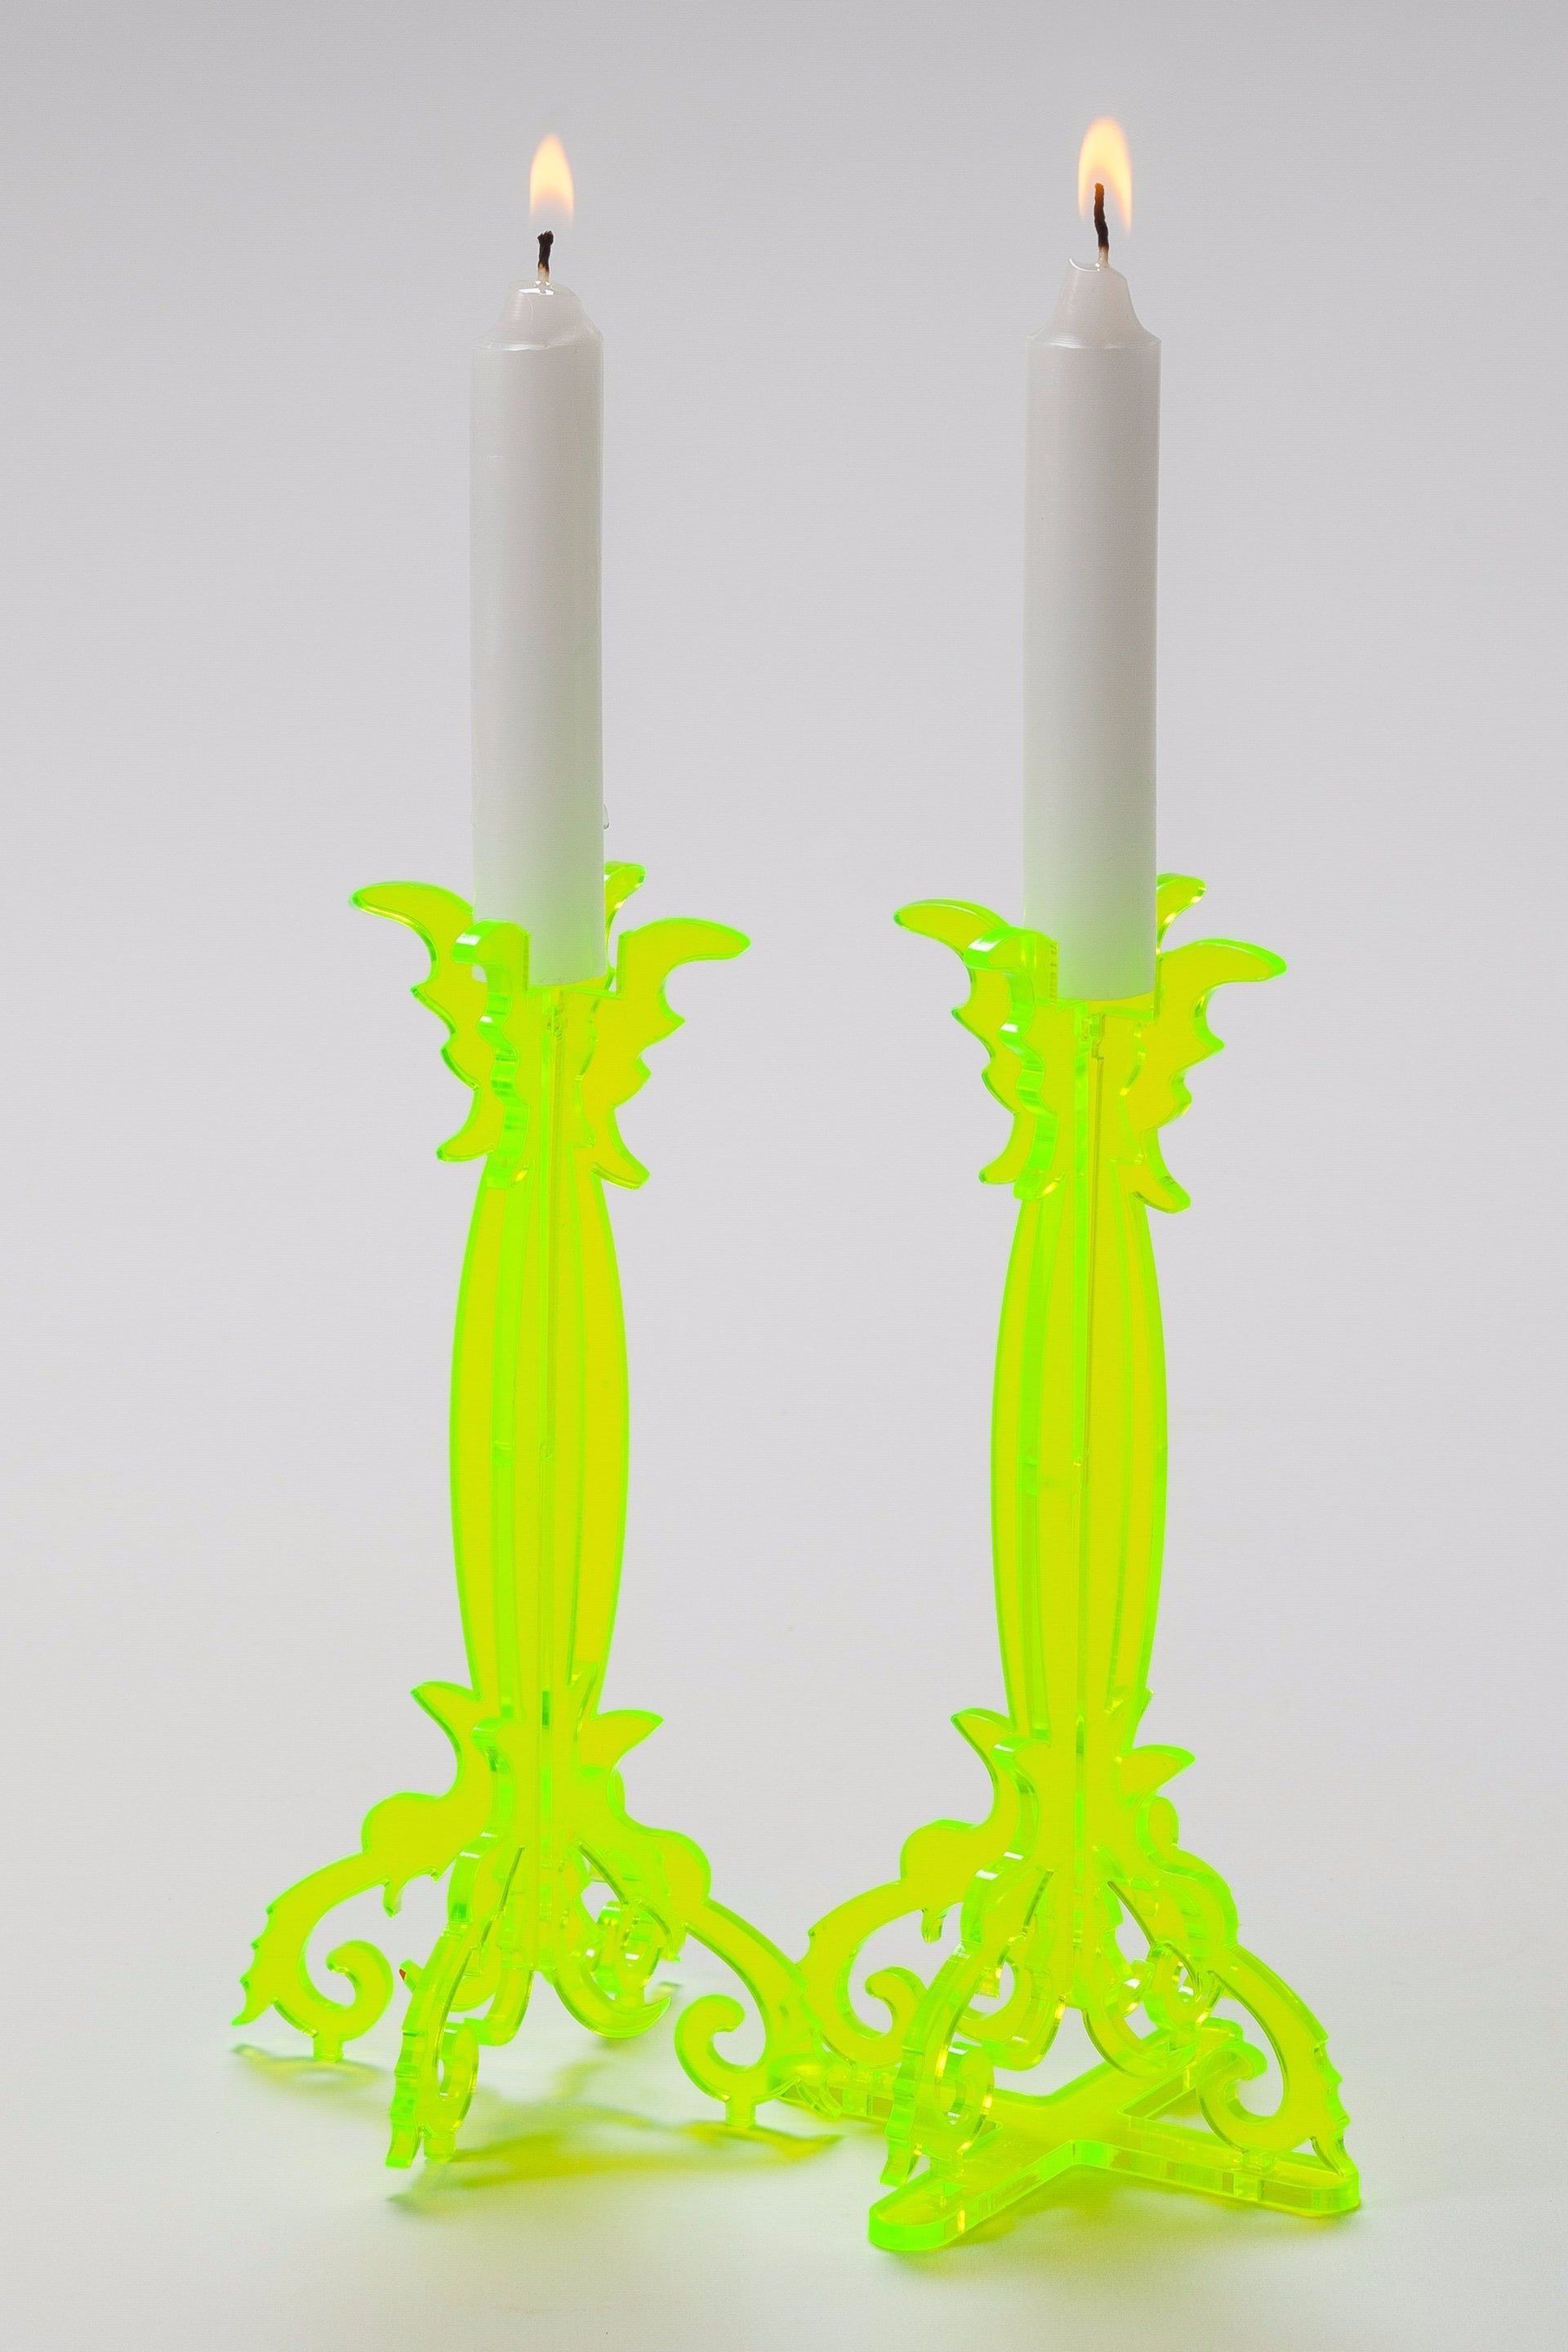 Barbara Shaw Candlesticks Neon Green Perspex Candlesticks